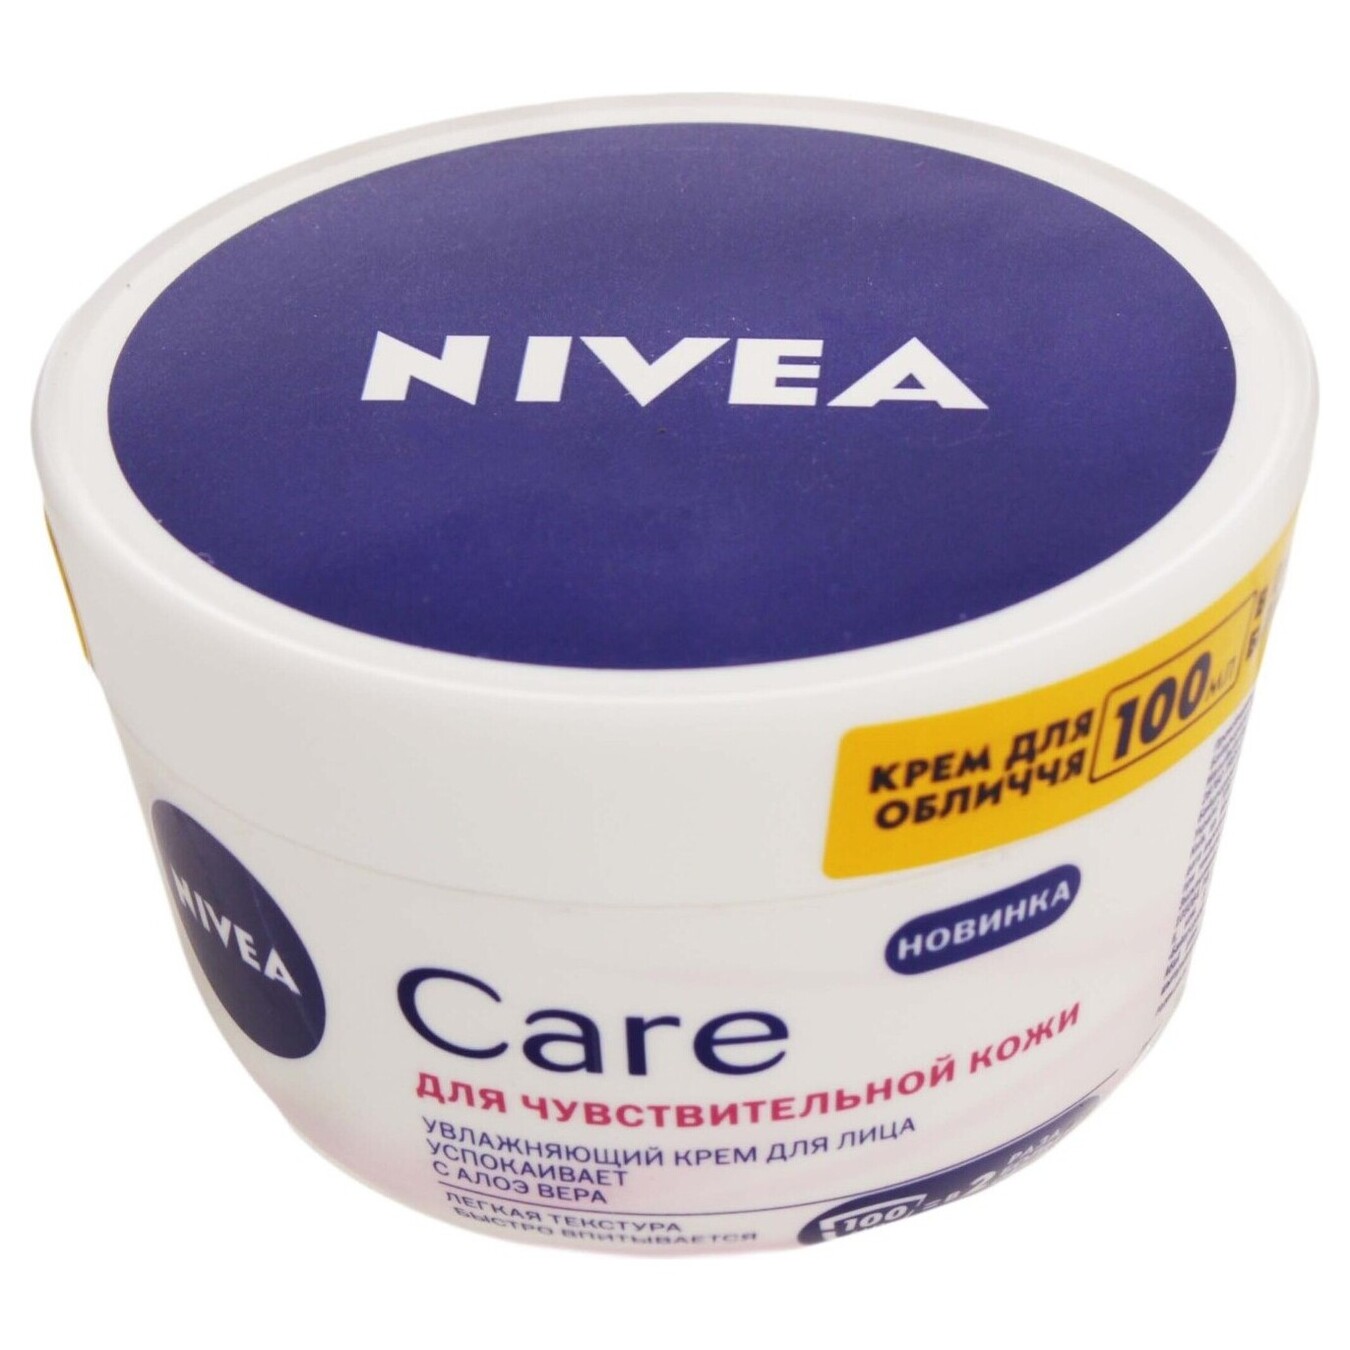 Nivea Care moisturizing cream for sensitive skin 100 ml 2